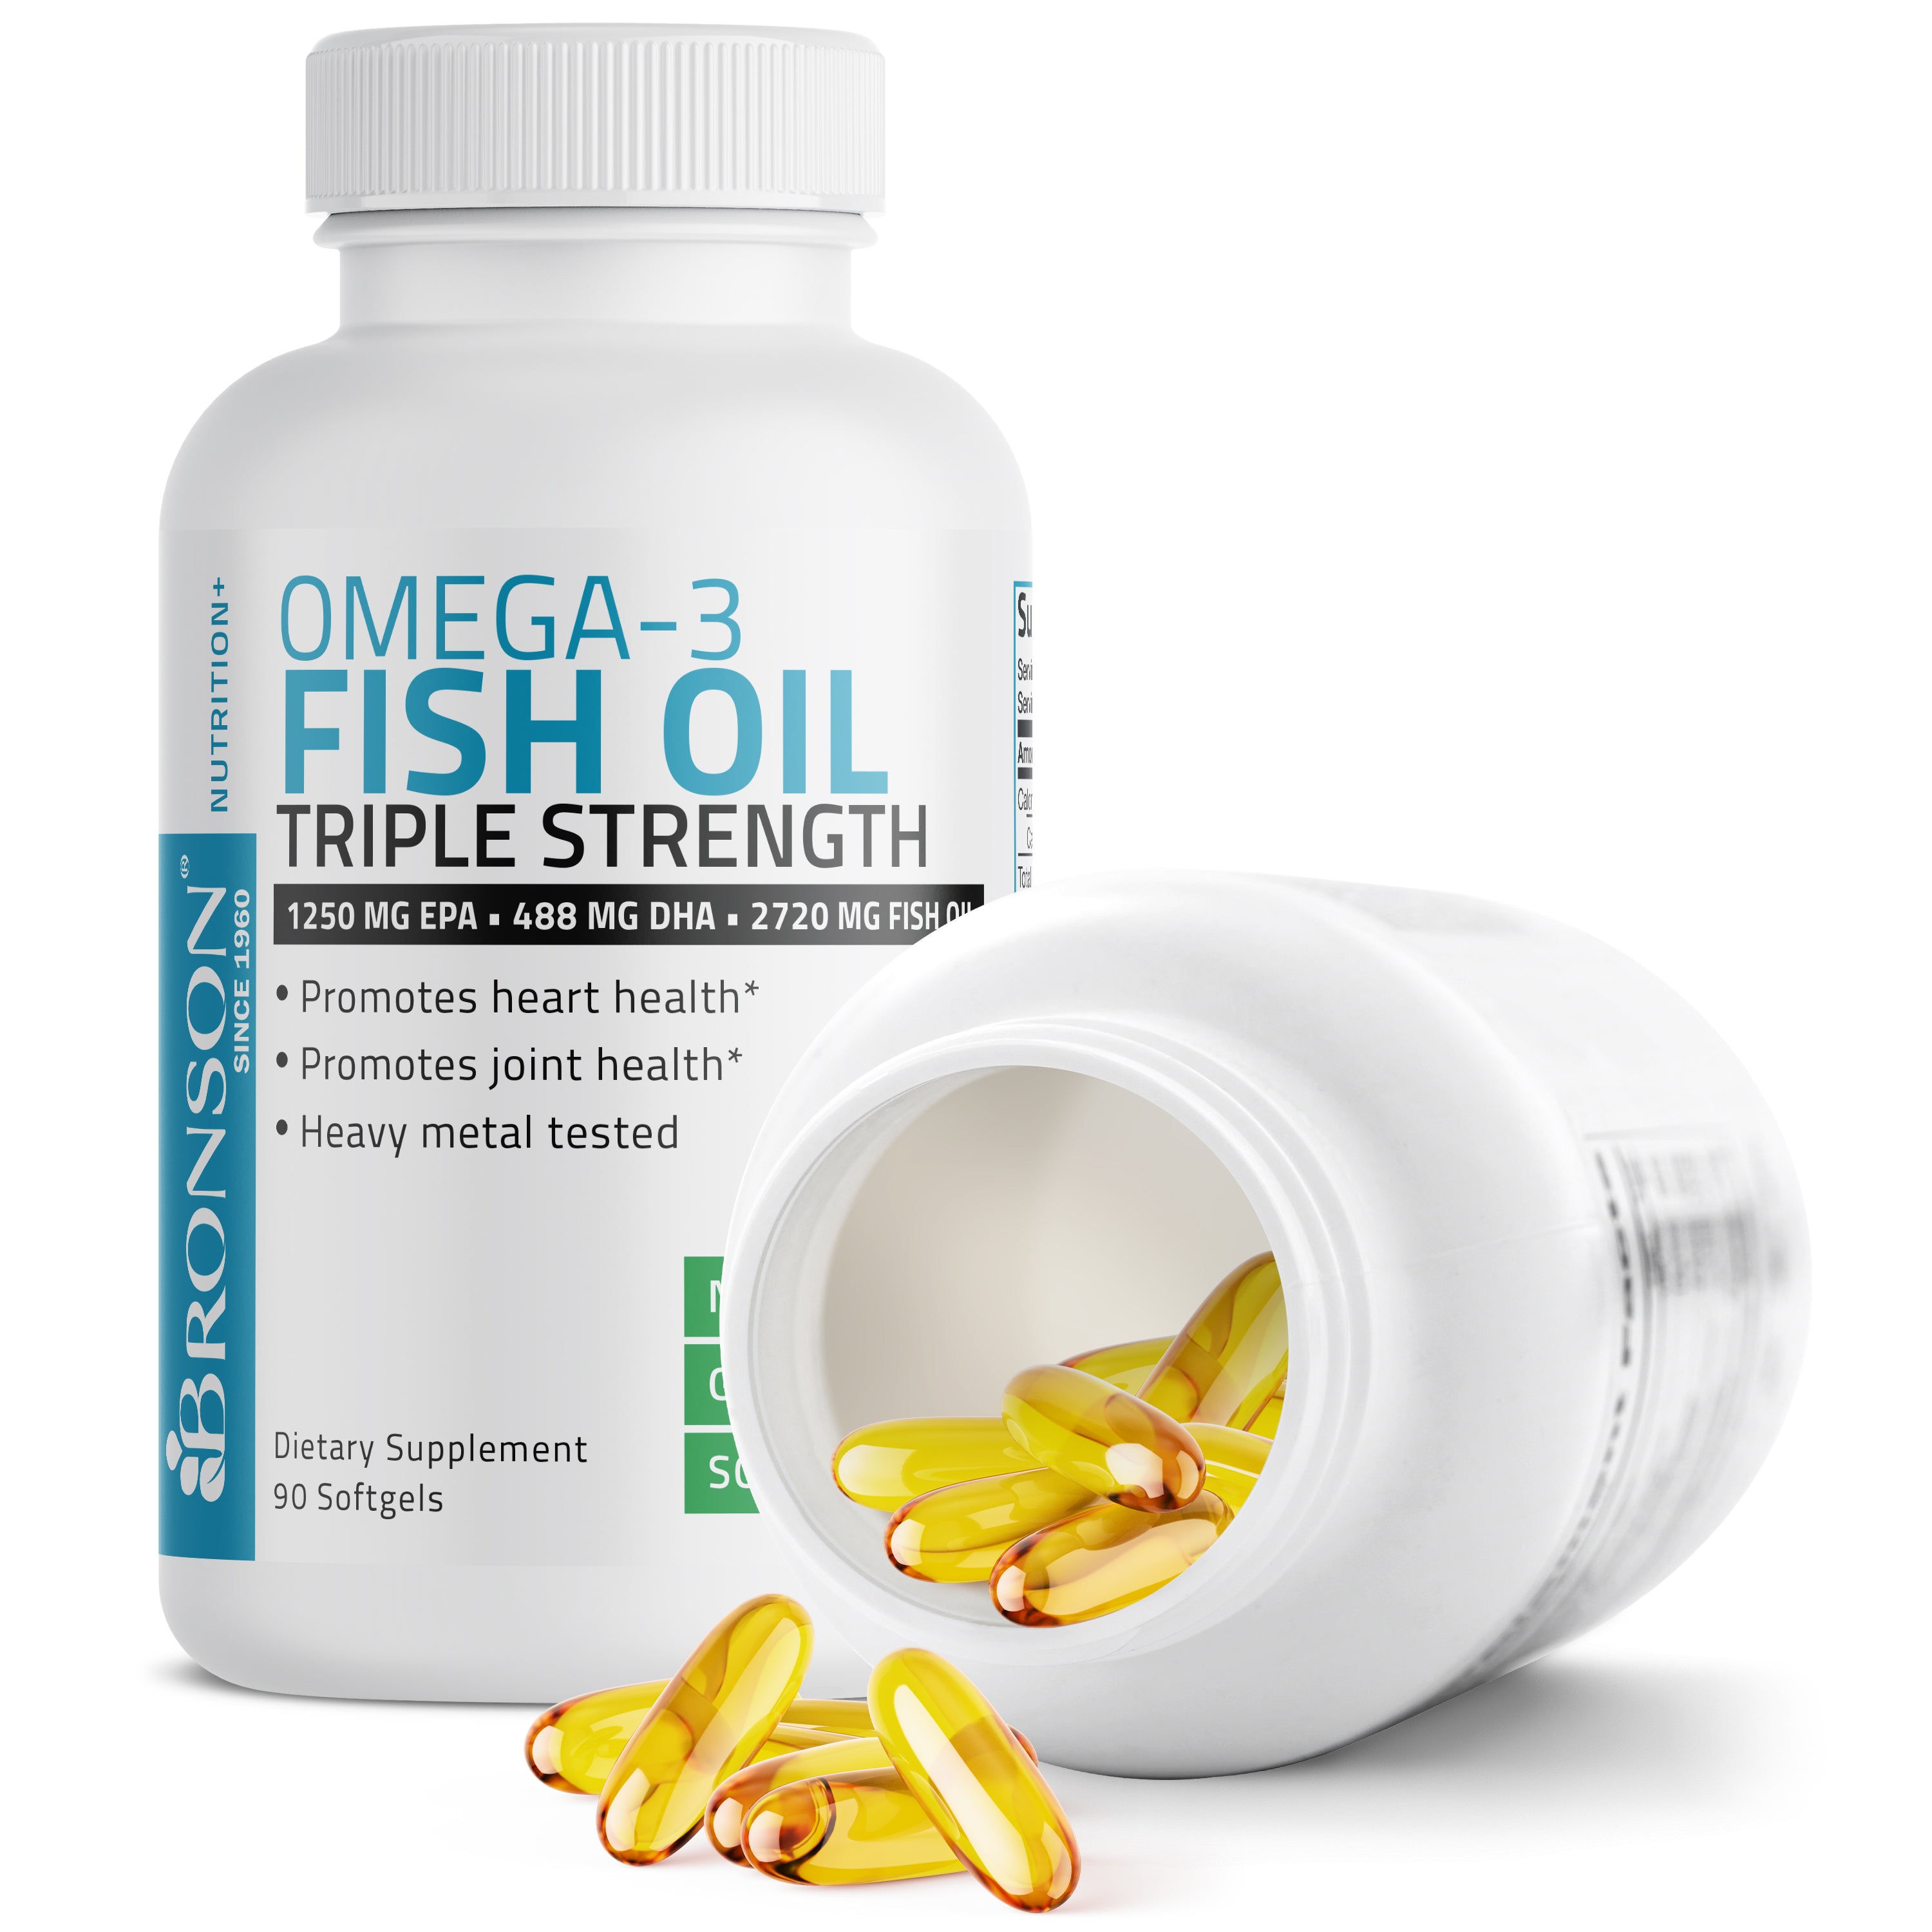 Bronson Omega 3 Fish Oil Triple Strength 2720 mg - High EPA 1250 mg DHA 488 mg - Heavy Metal Tested - Non GMO - 90 Softgels